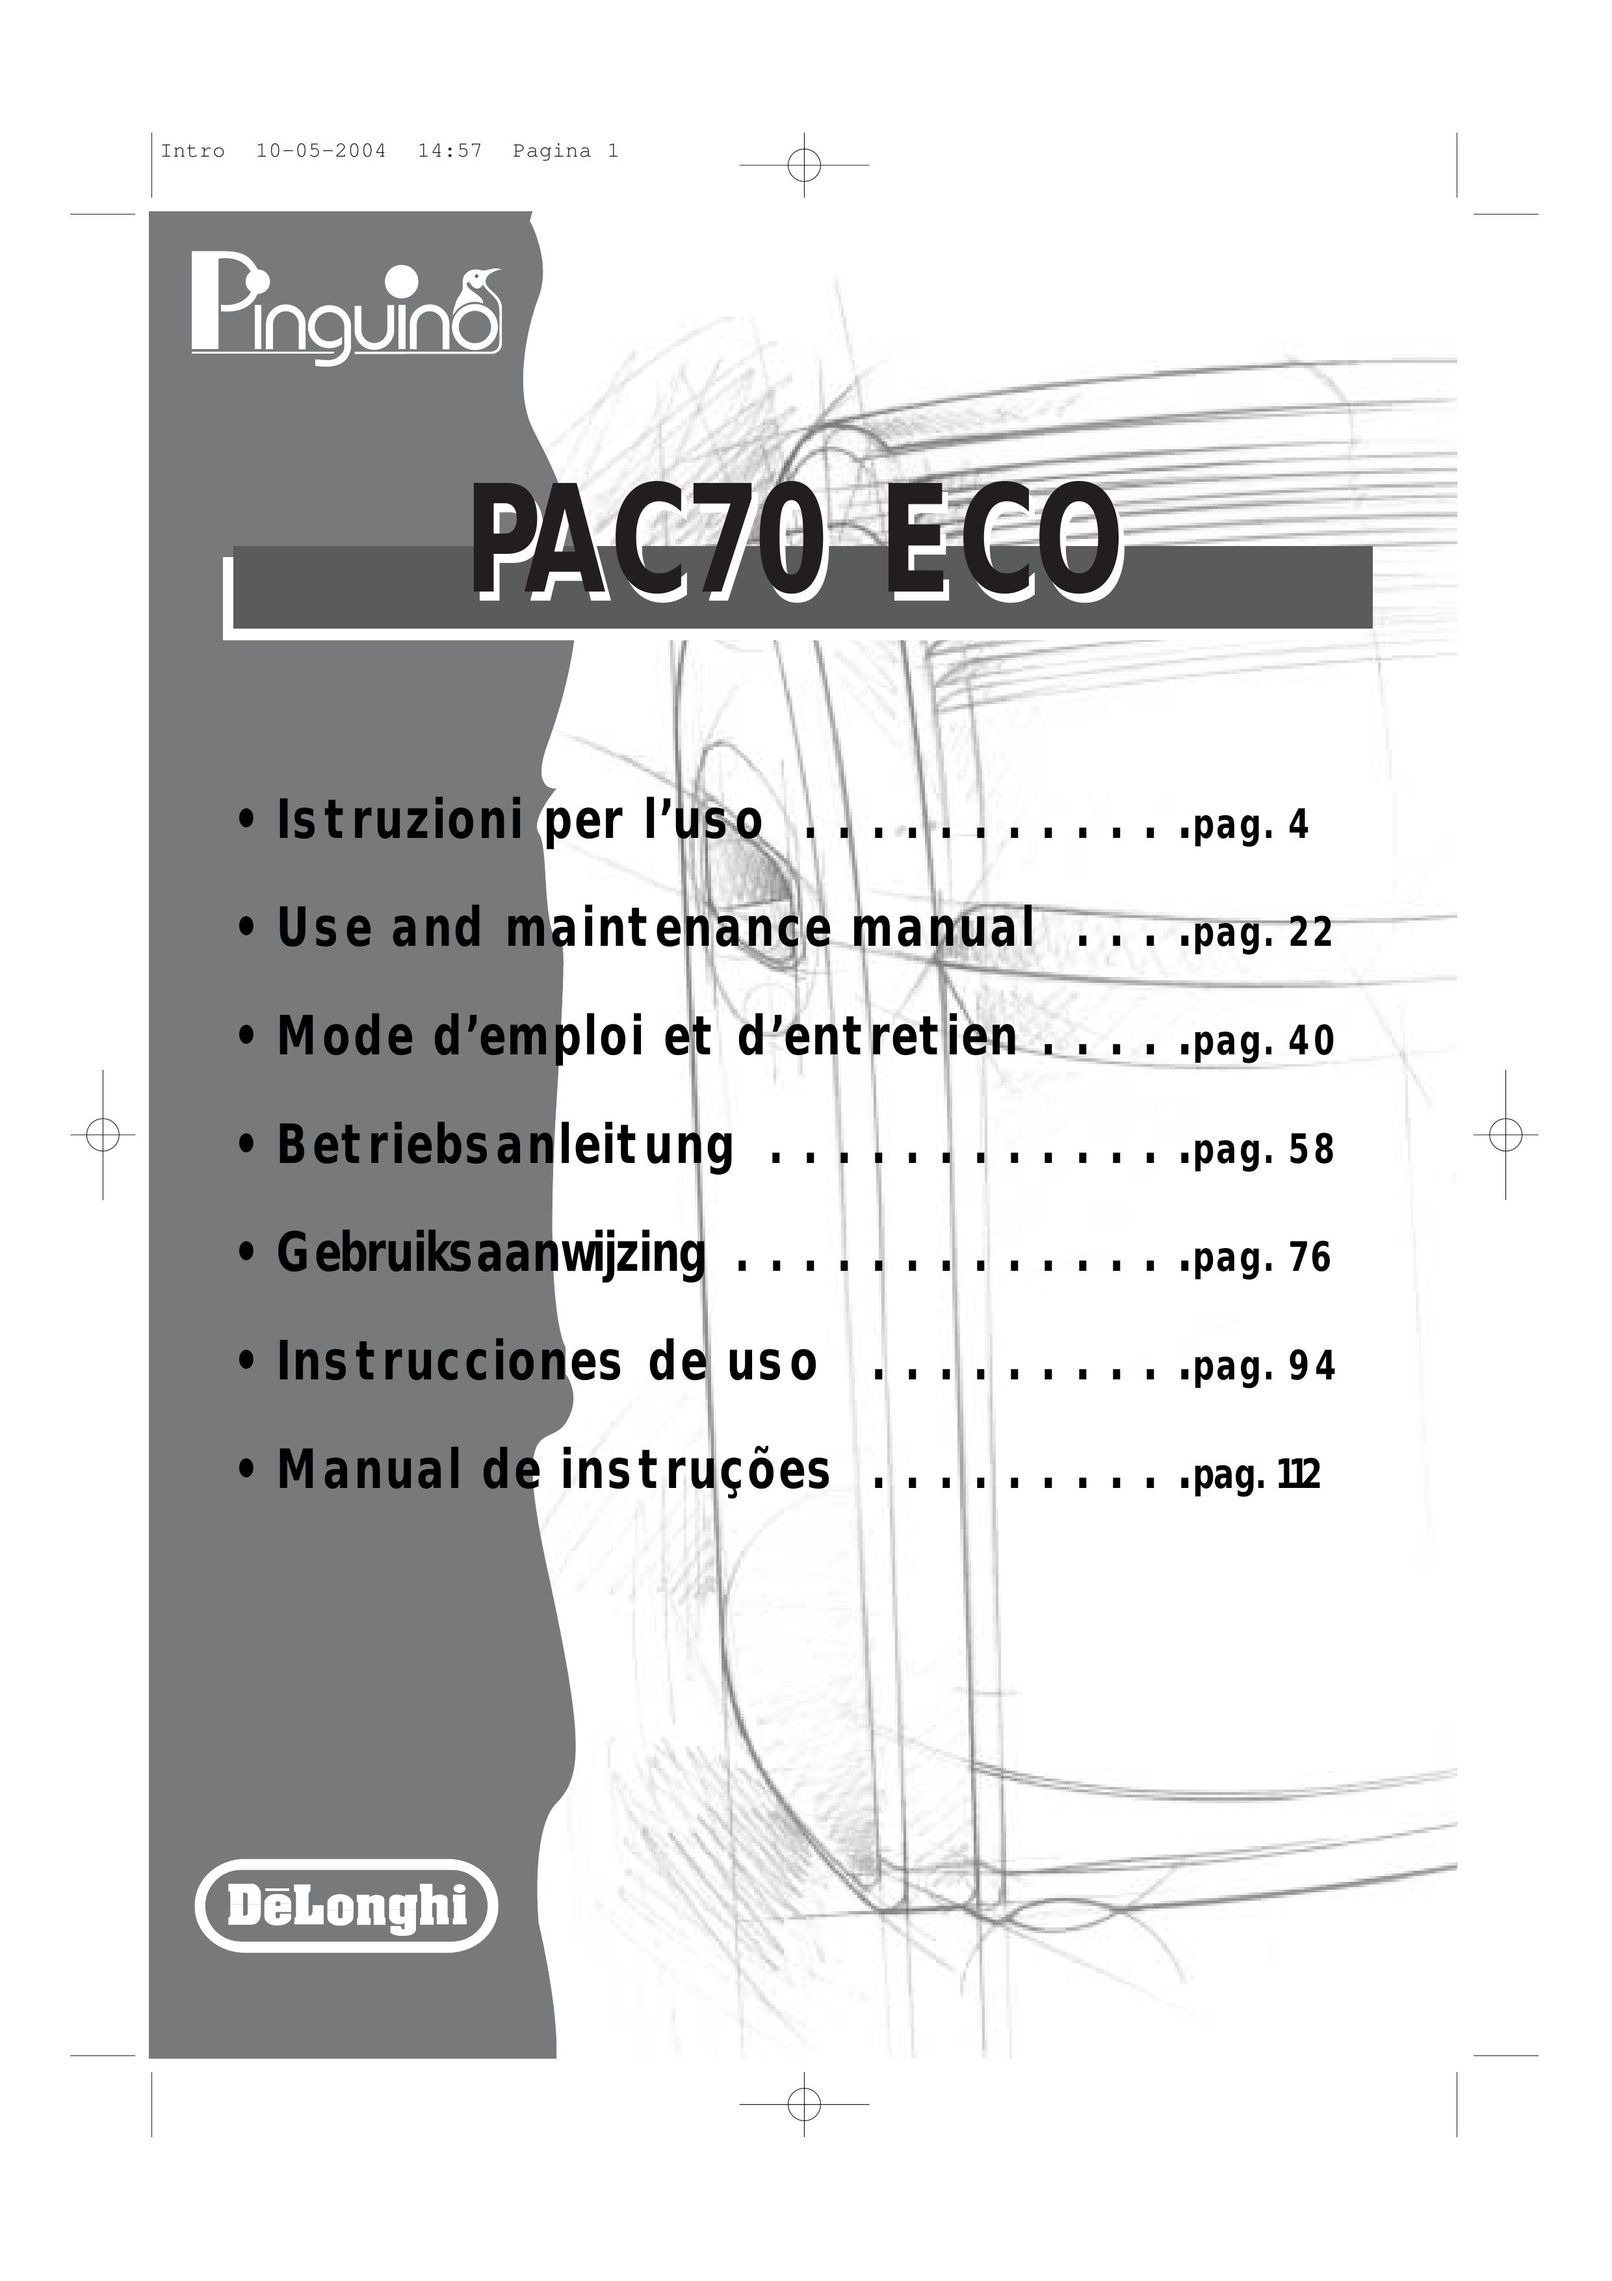 DeLonghi PAC70 ECO Air Conditioner User Manual